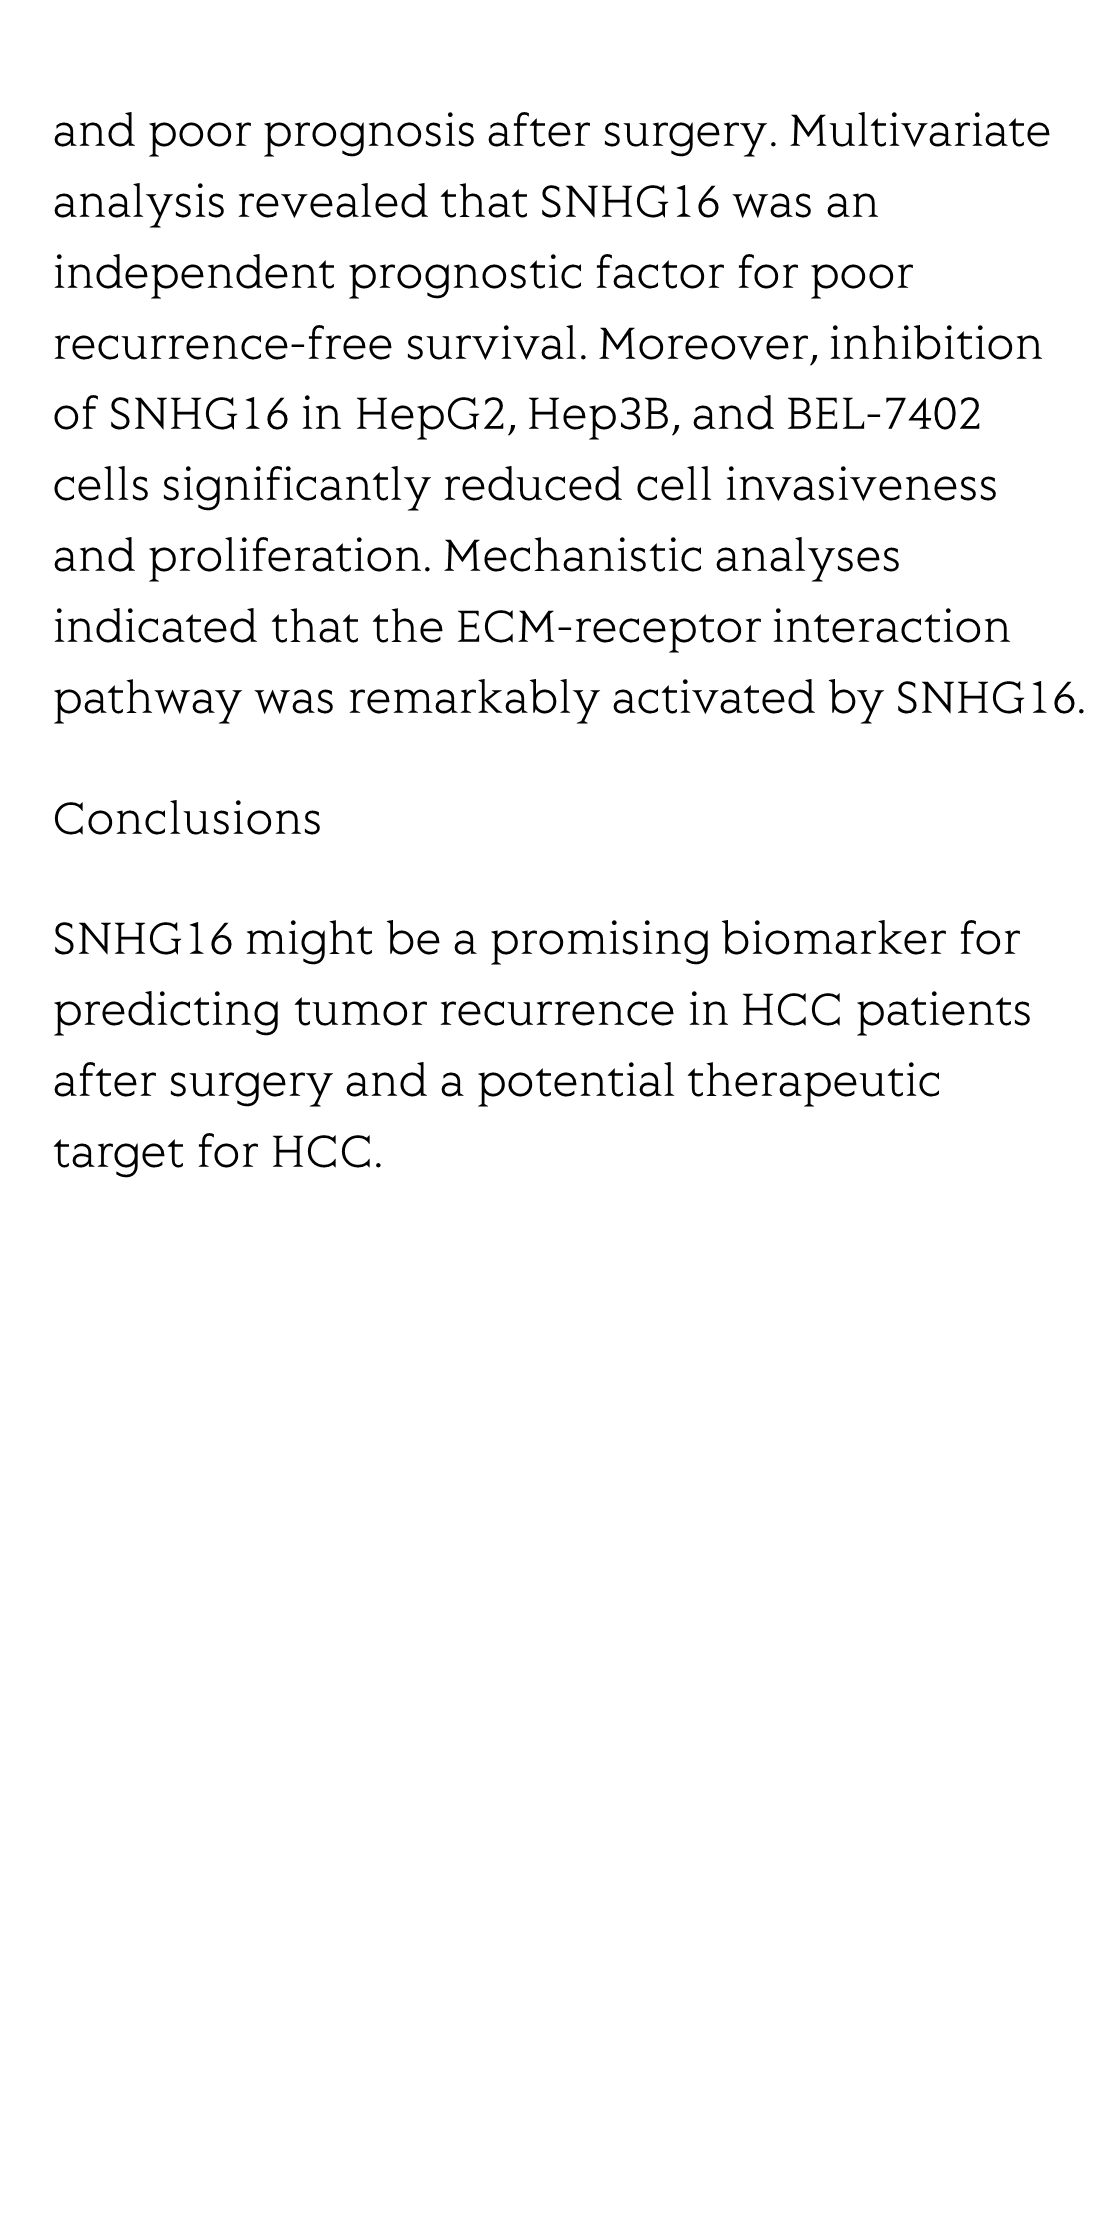 SNHG16 promotes hepatocellular carcinoma development via activating ECM receptor interaction pathway_3